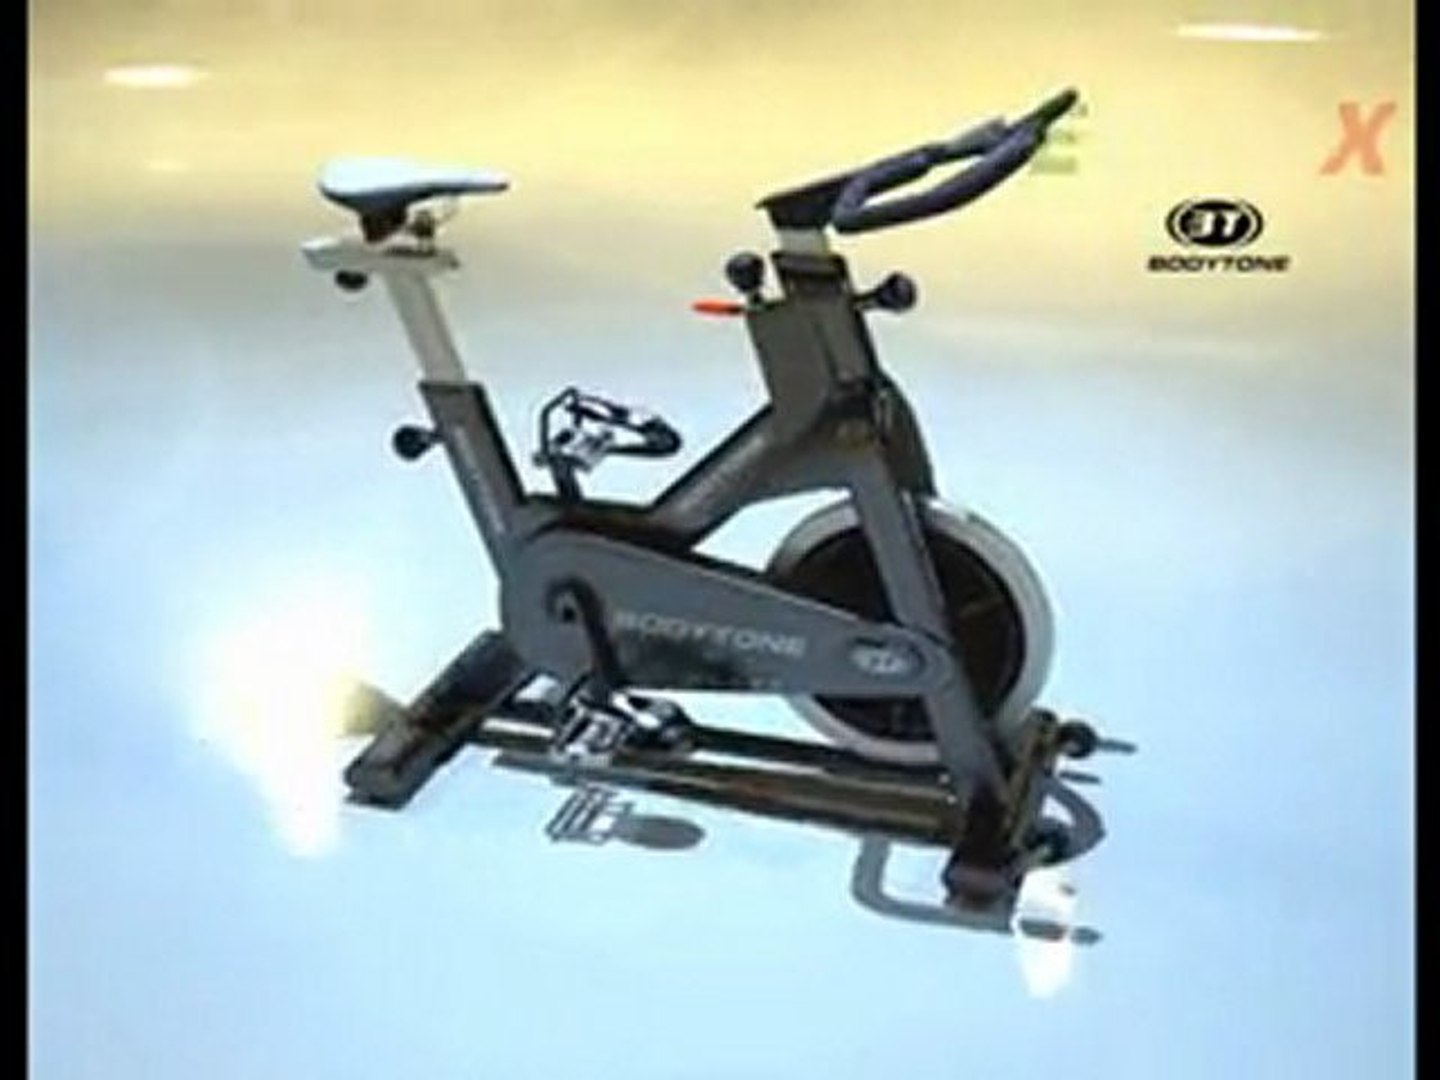 Bodytone EOLOX Bicicleta Spinning - Vídeo Dailymotion